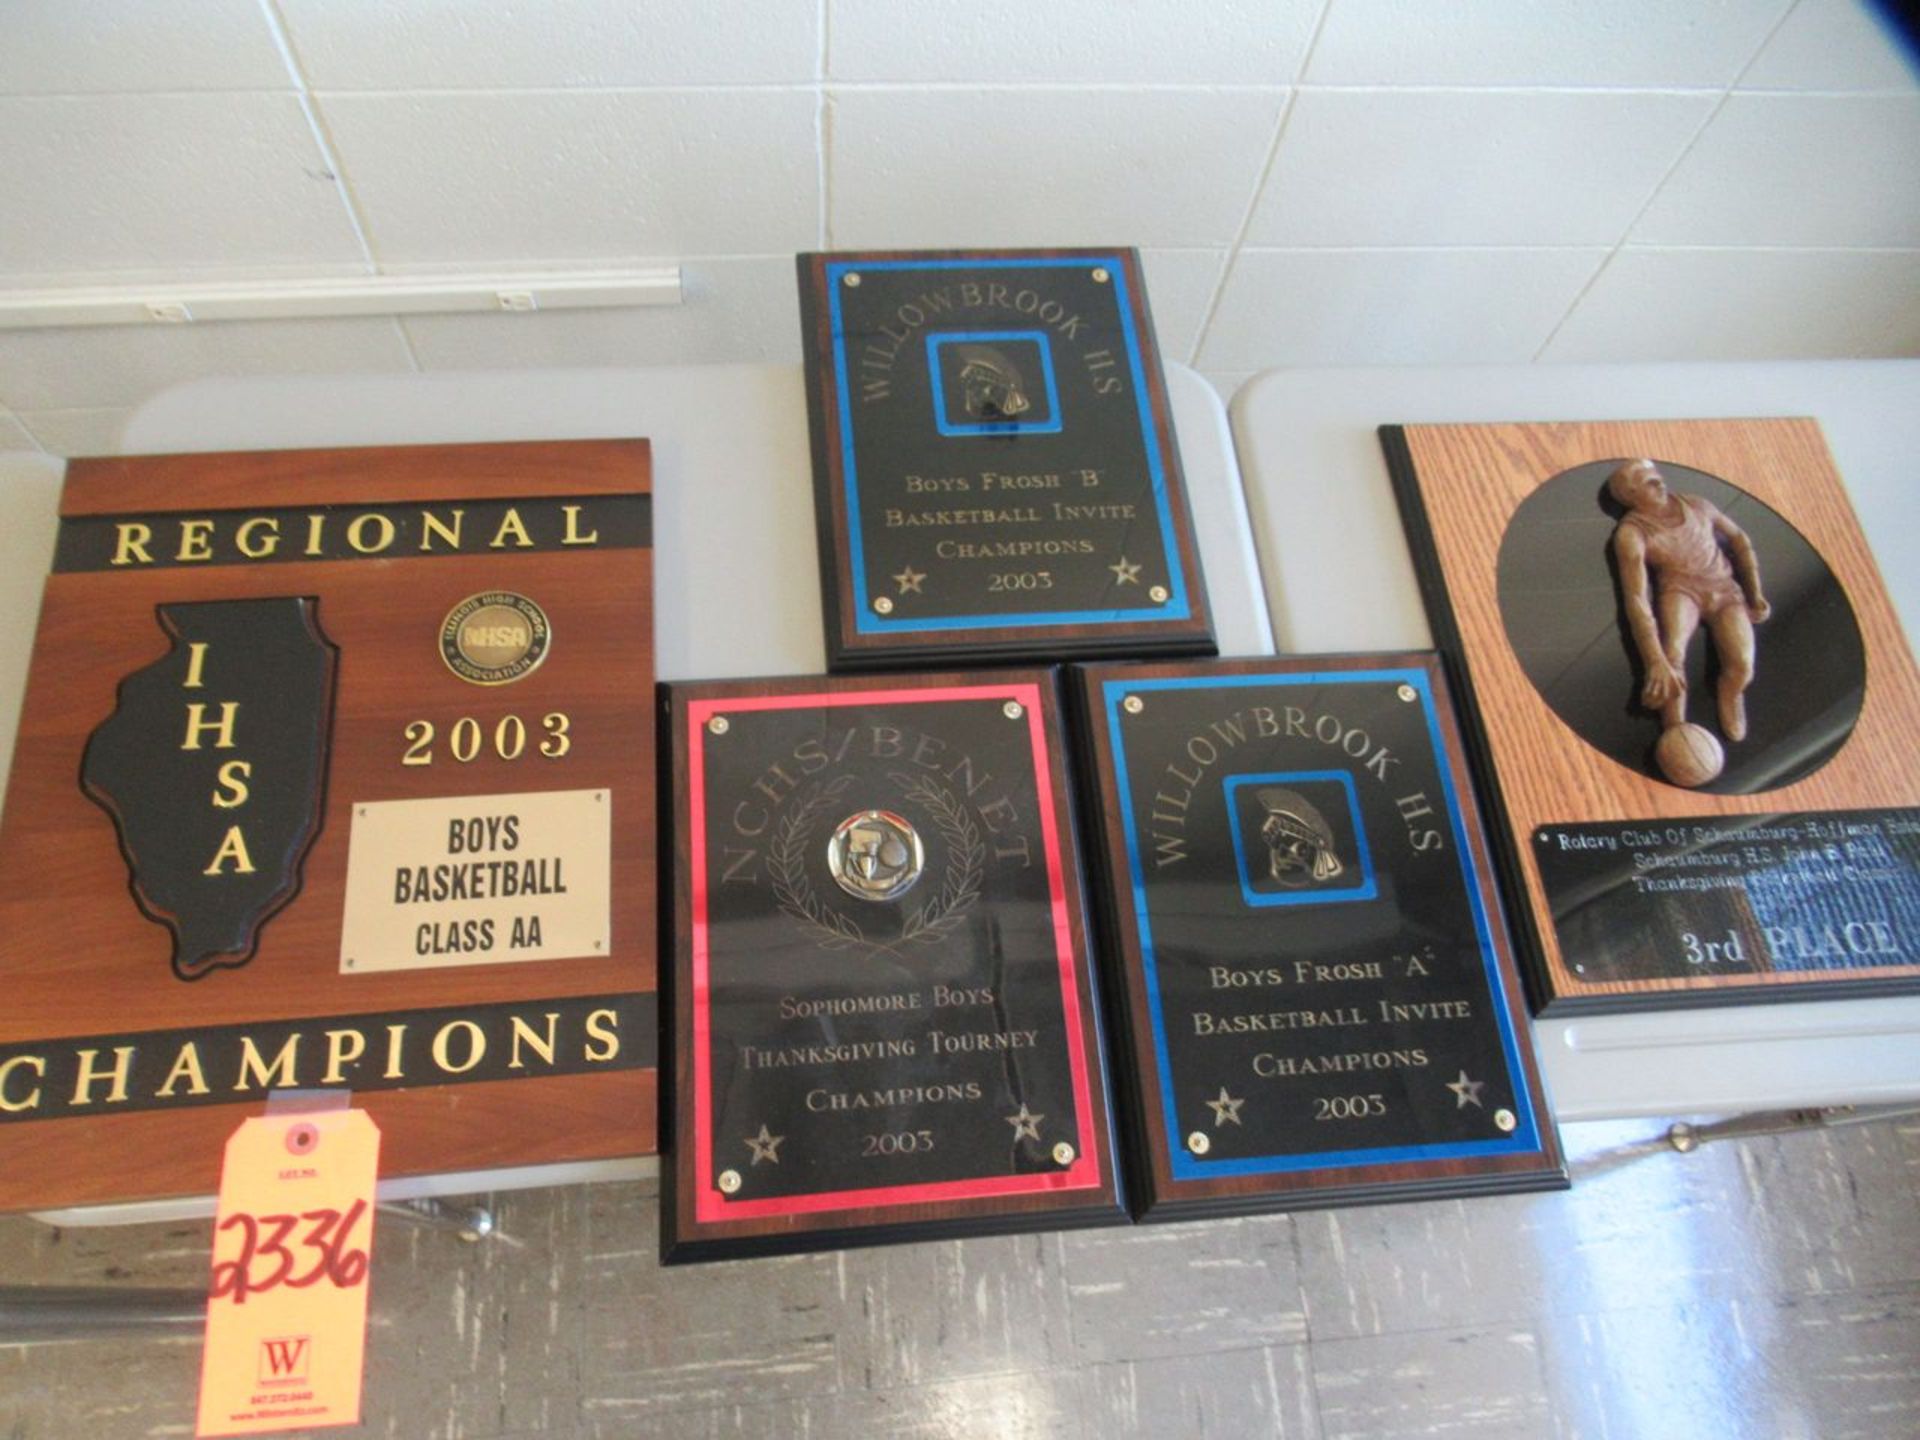 2003 IHSA Class AA State Regional Champions Plaque, 2003 Willowbrook High School Boys Frosh "A"